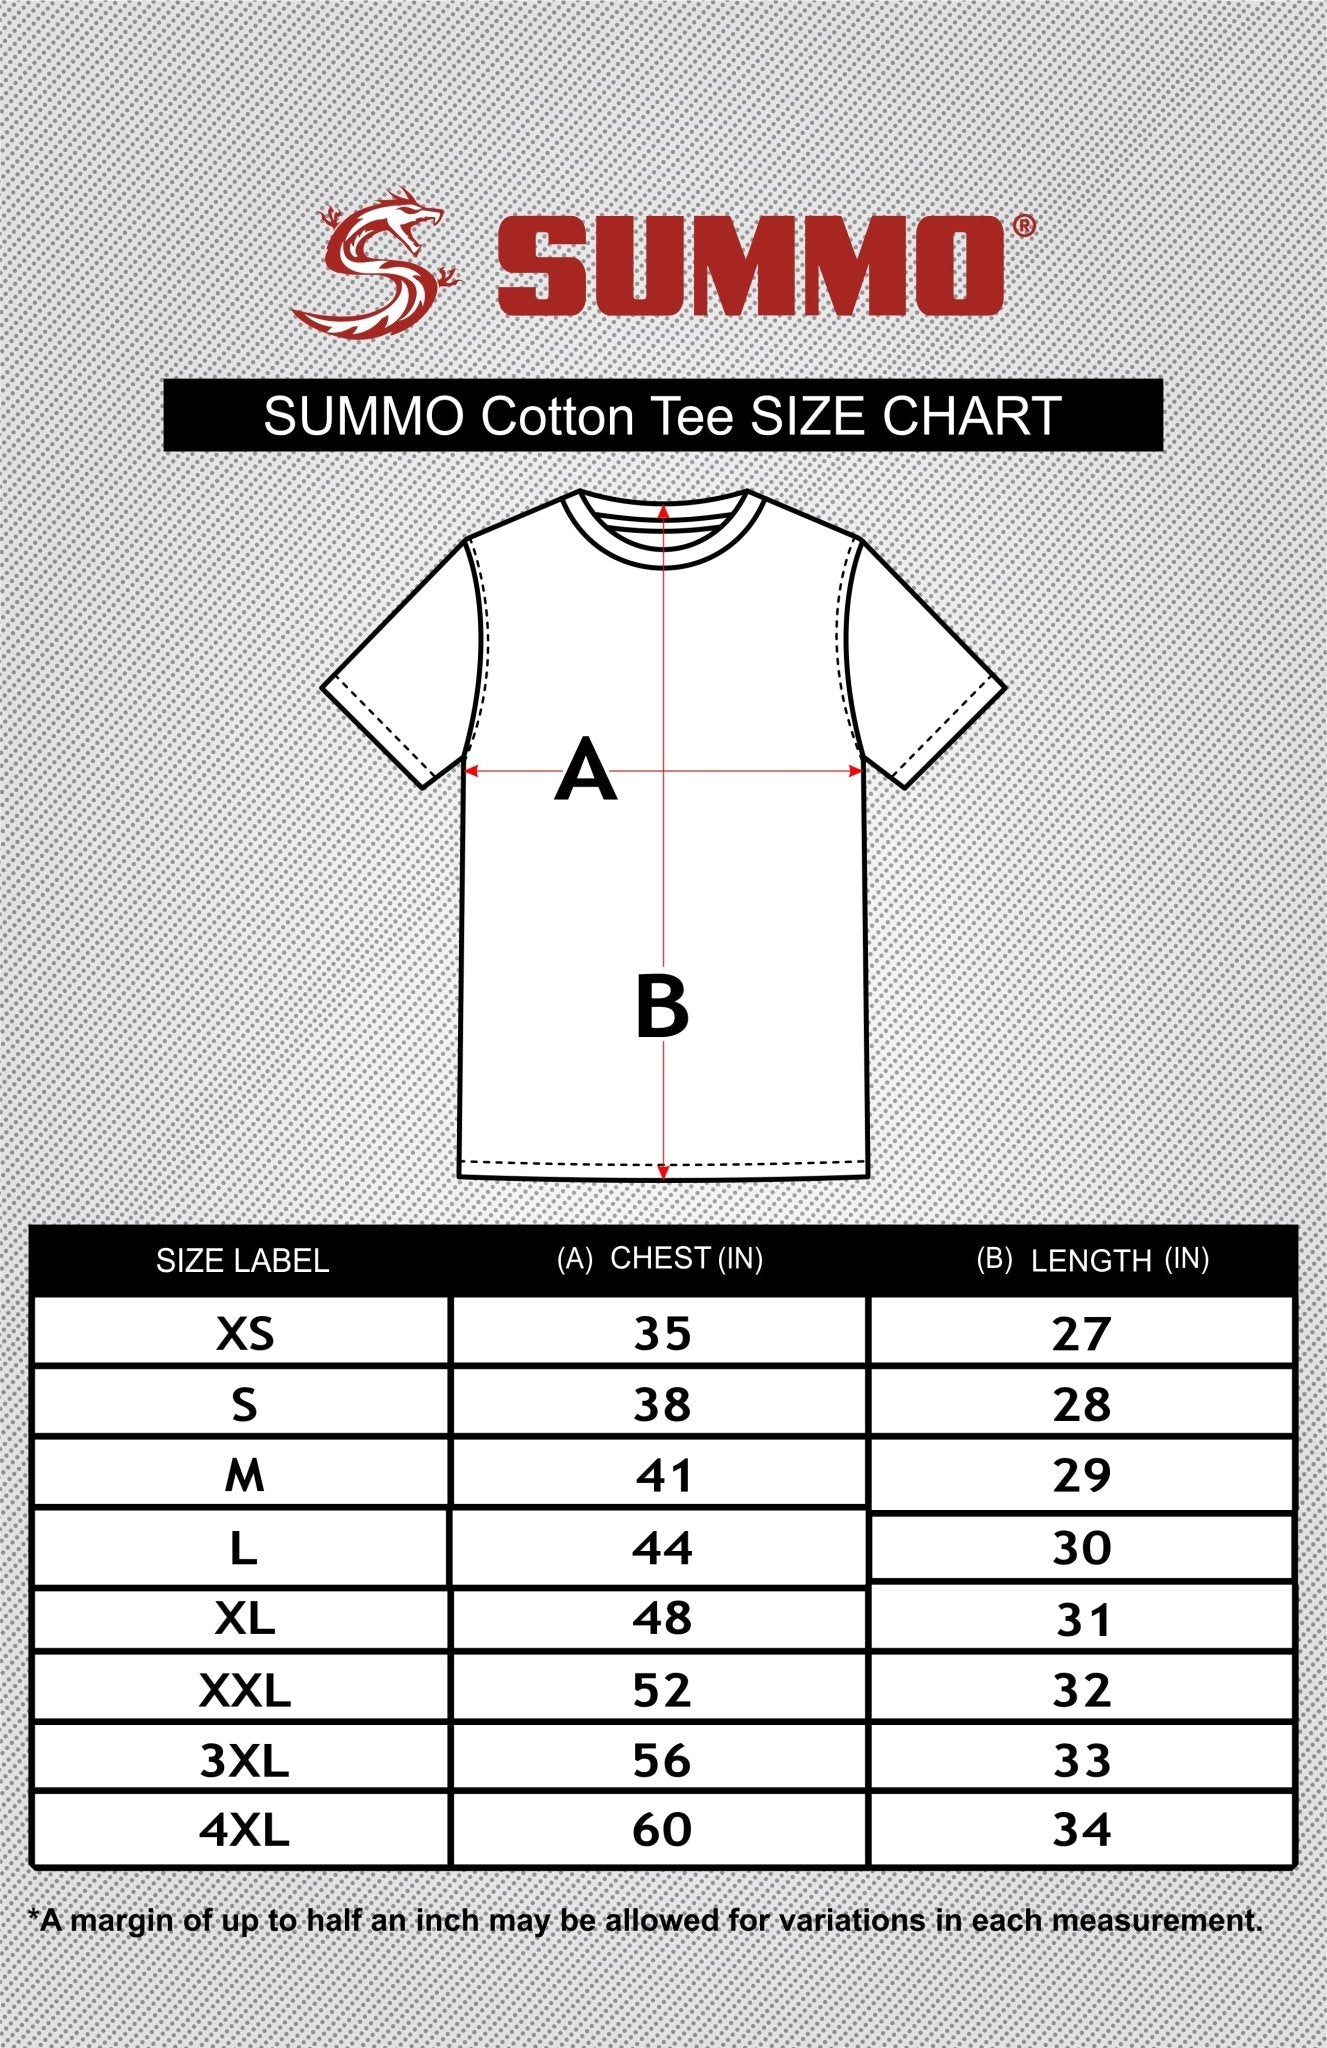 Summo Striker Combat Cotton Tee for Men/Women - Summo Sports